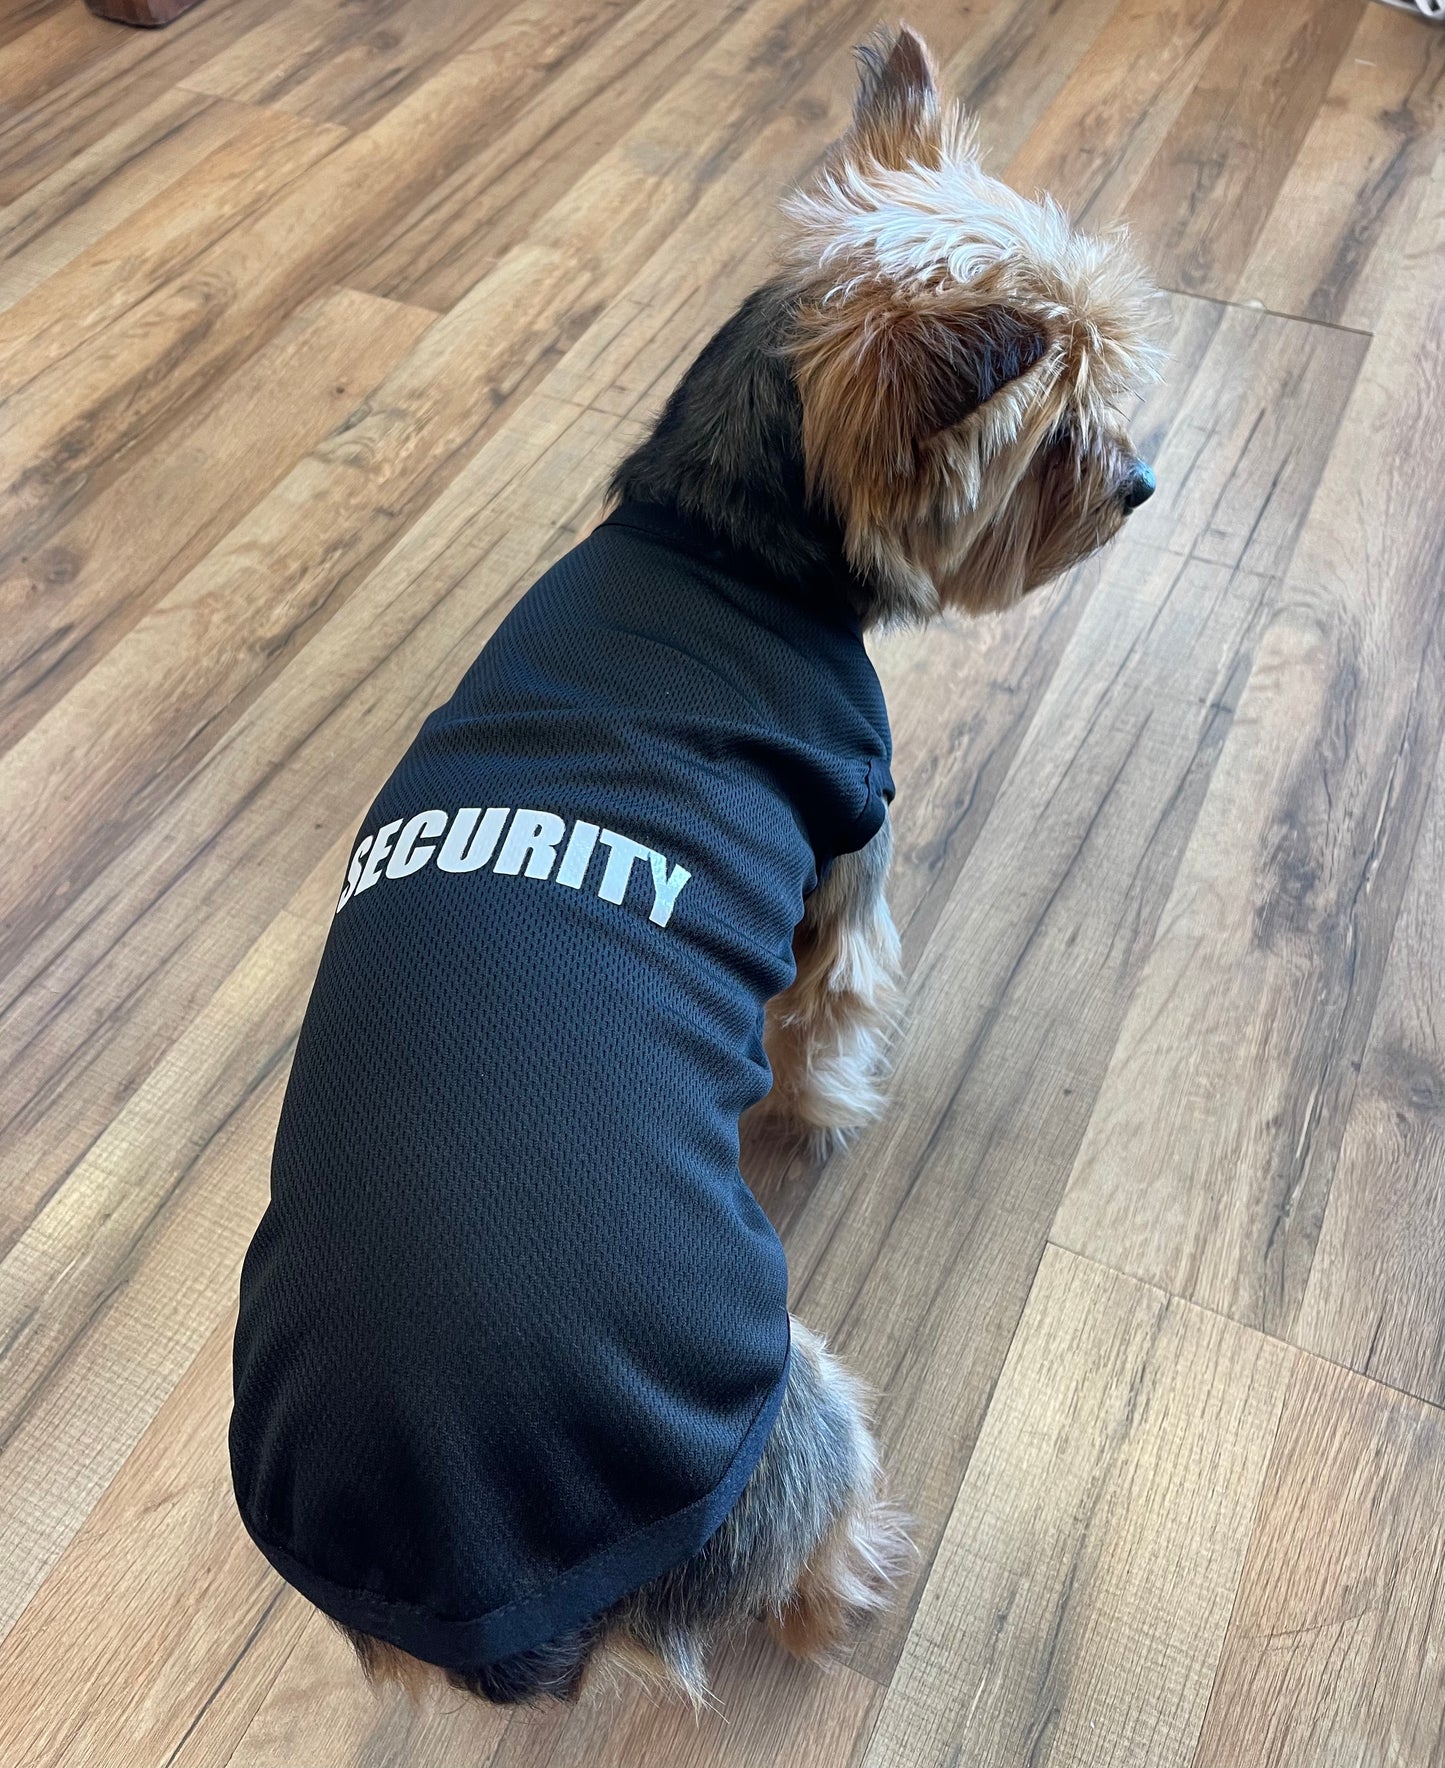 Security Doggy Shirt